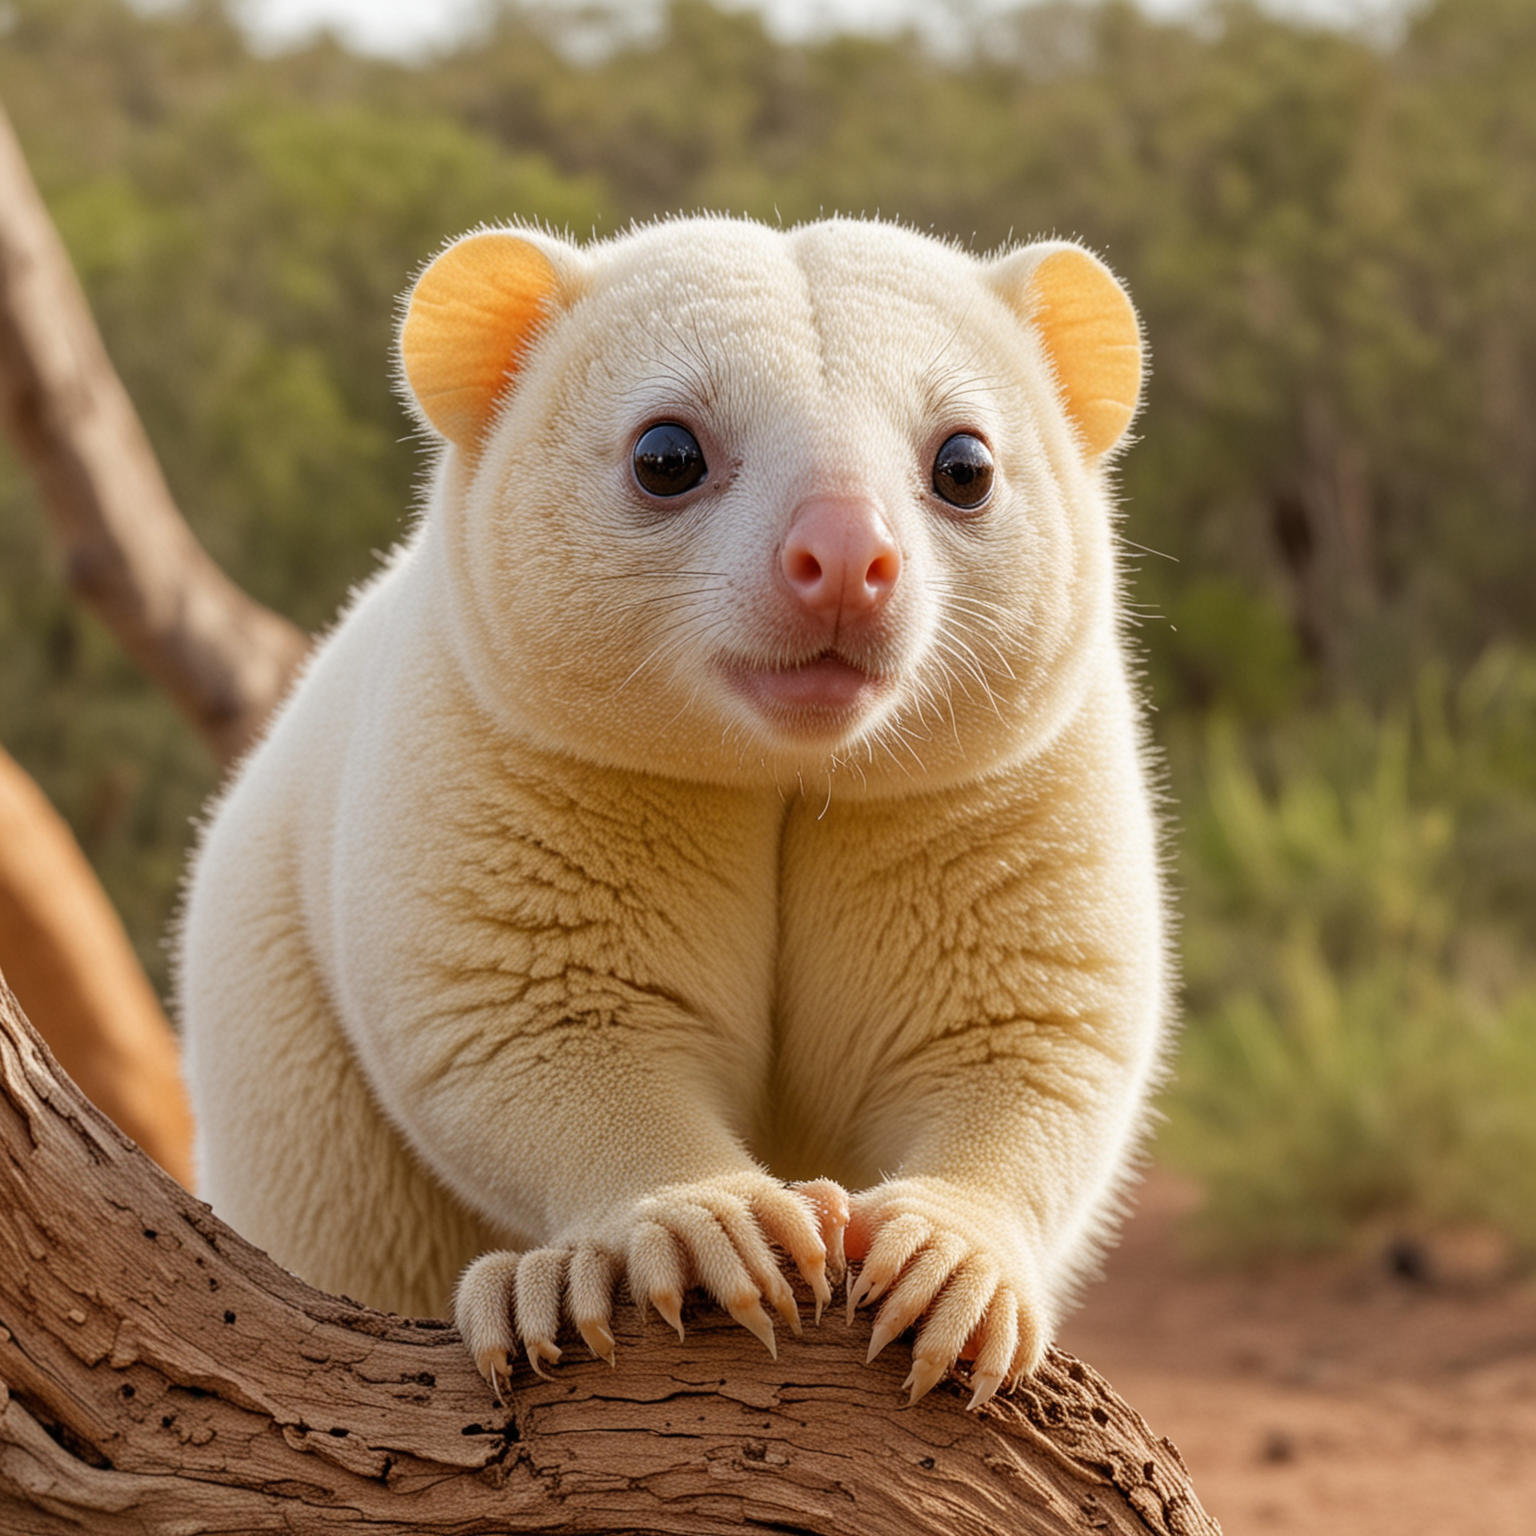 light colored cuscus in Australia outback